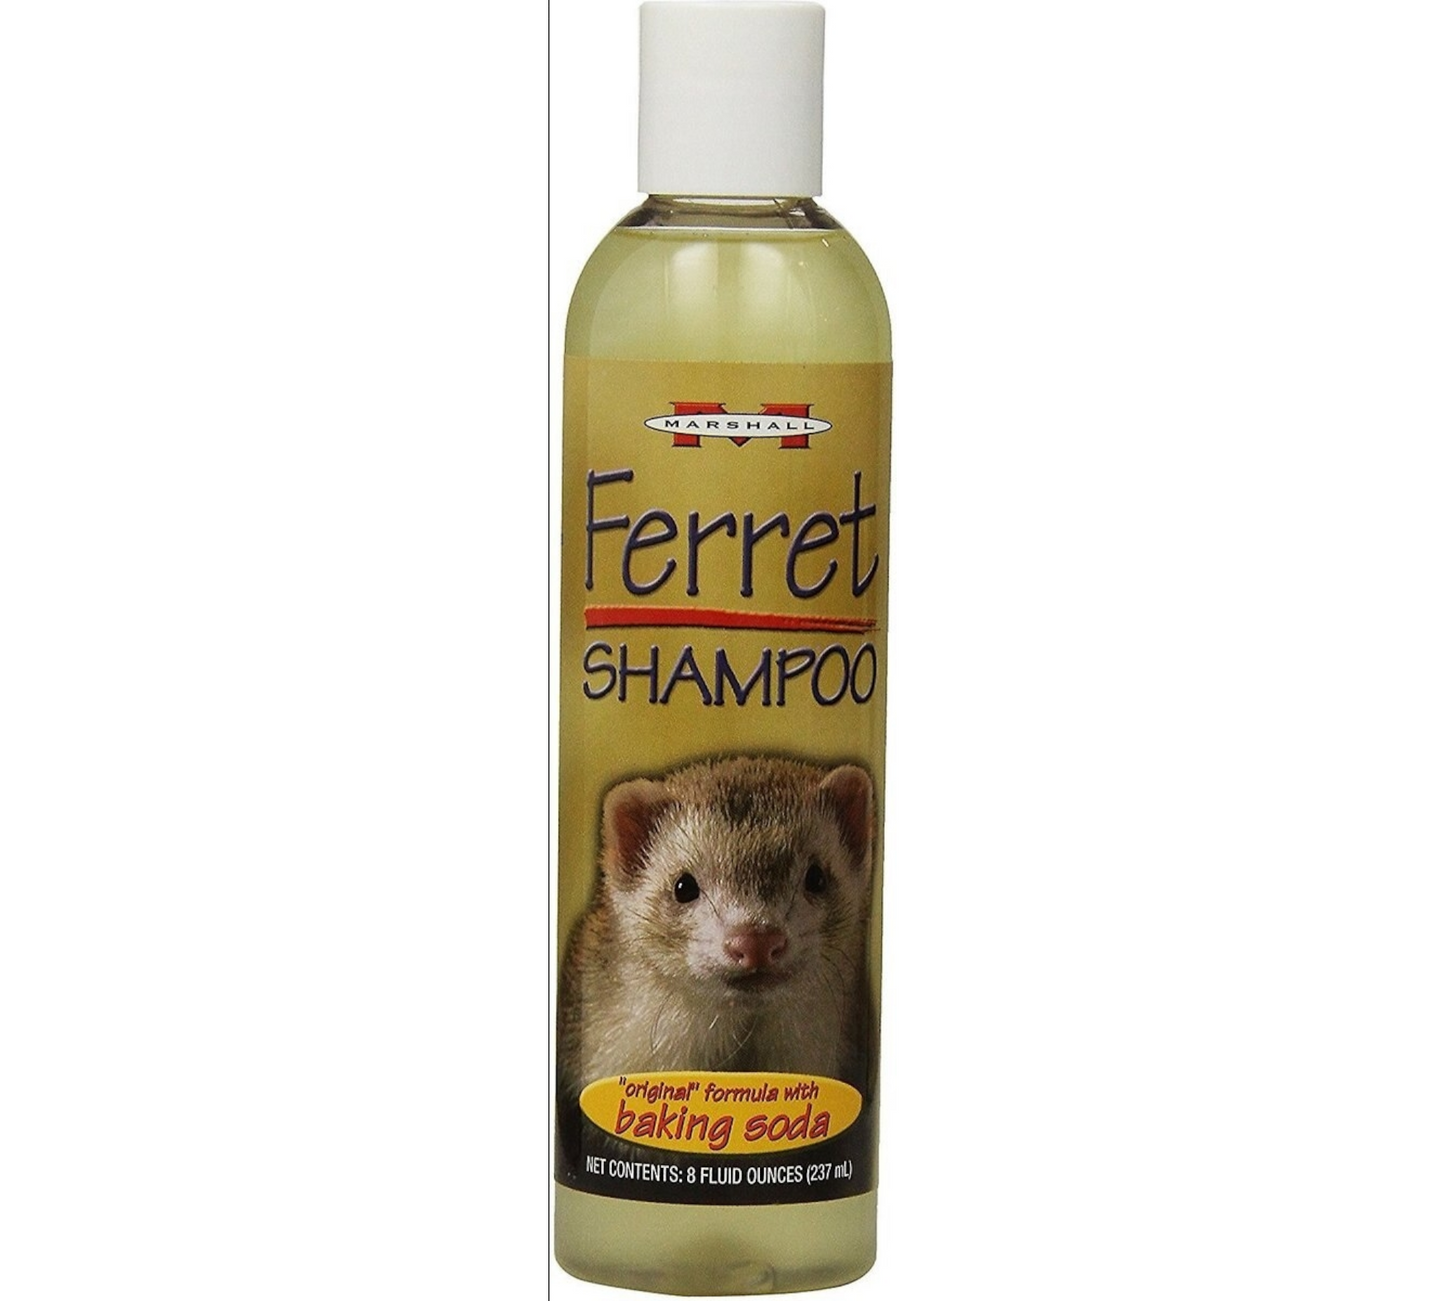 Marshall Original Formula with Baking Soda Shampoo for Ferrets, 